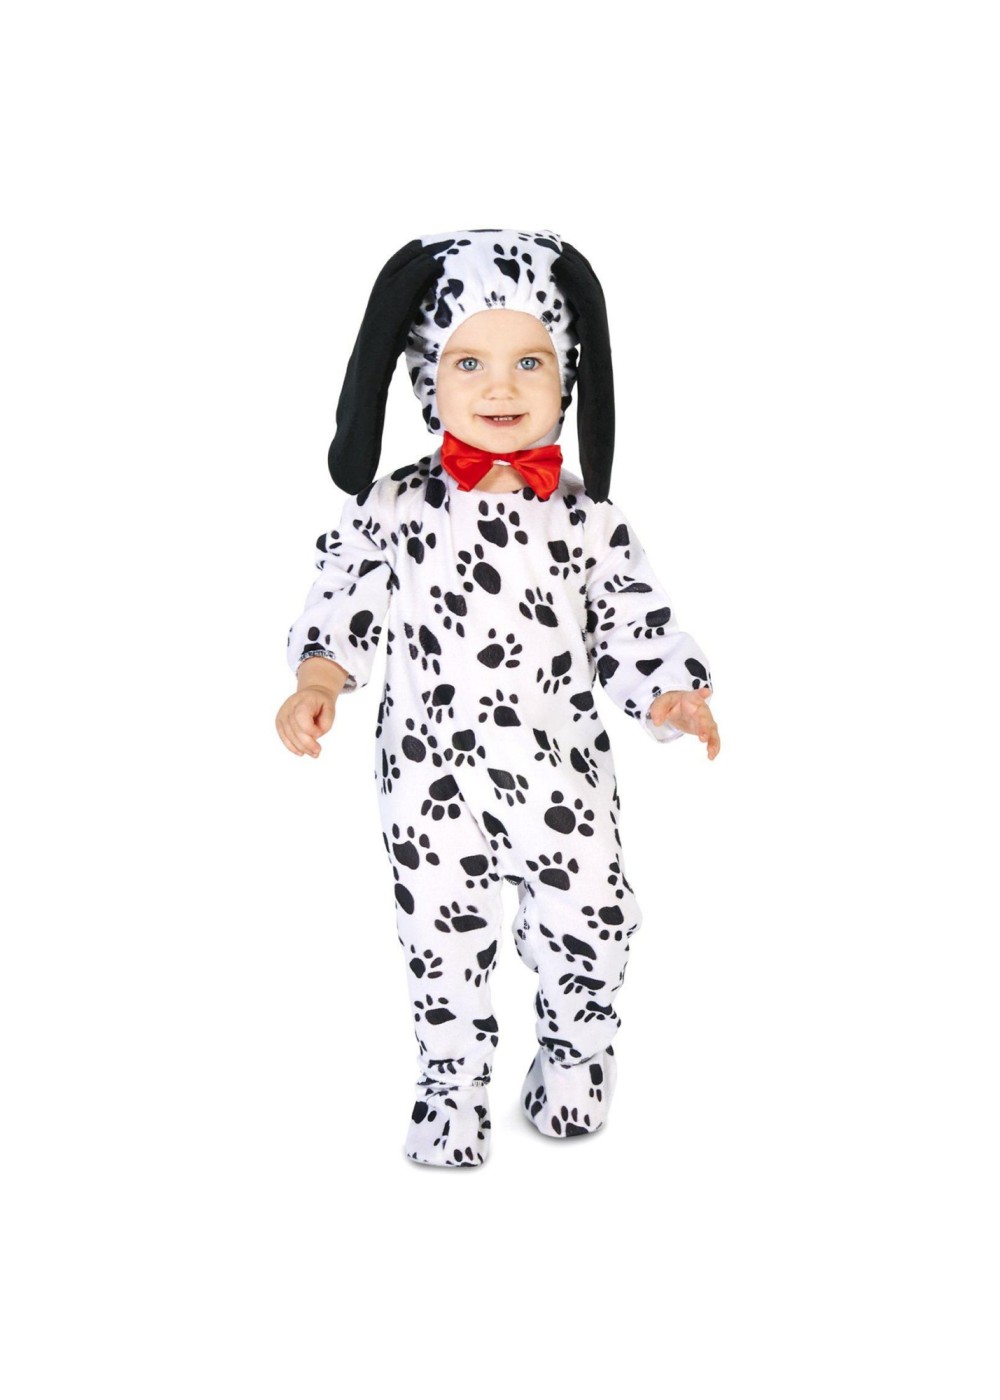 Dalmatian Costume For Boy